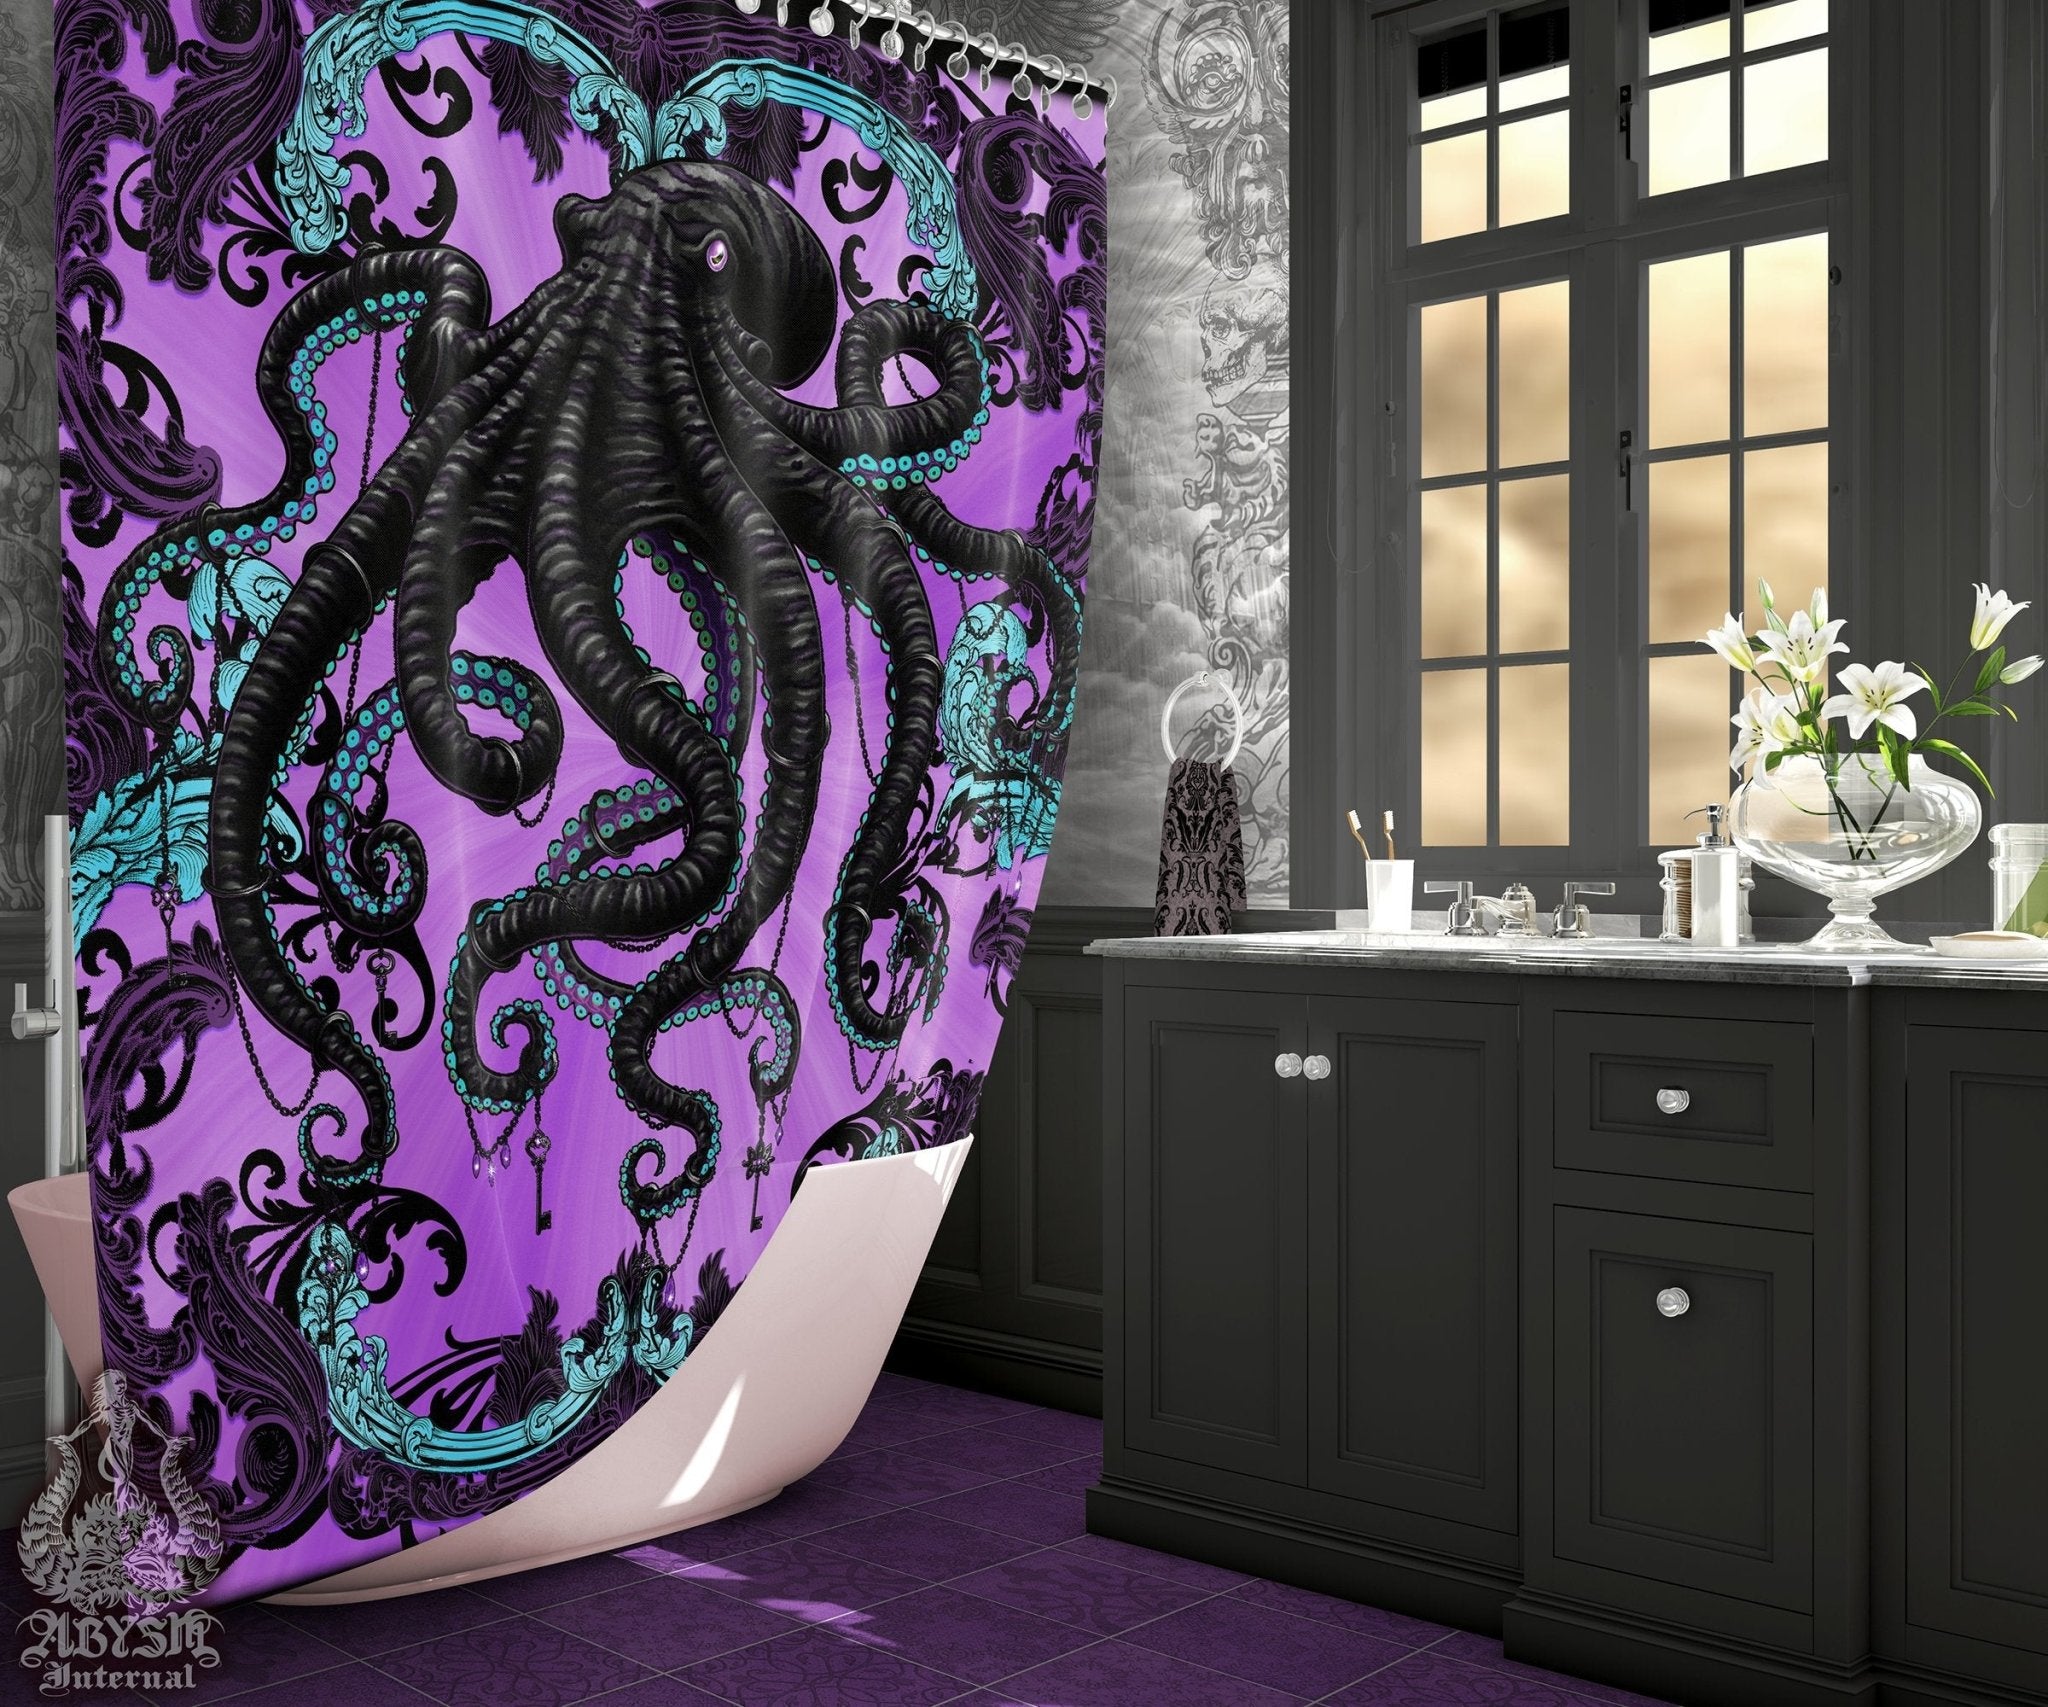 Pastel Goth Shower Curtain, Gothic Bathroom Decor - Black Octopus - Abysm Internal